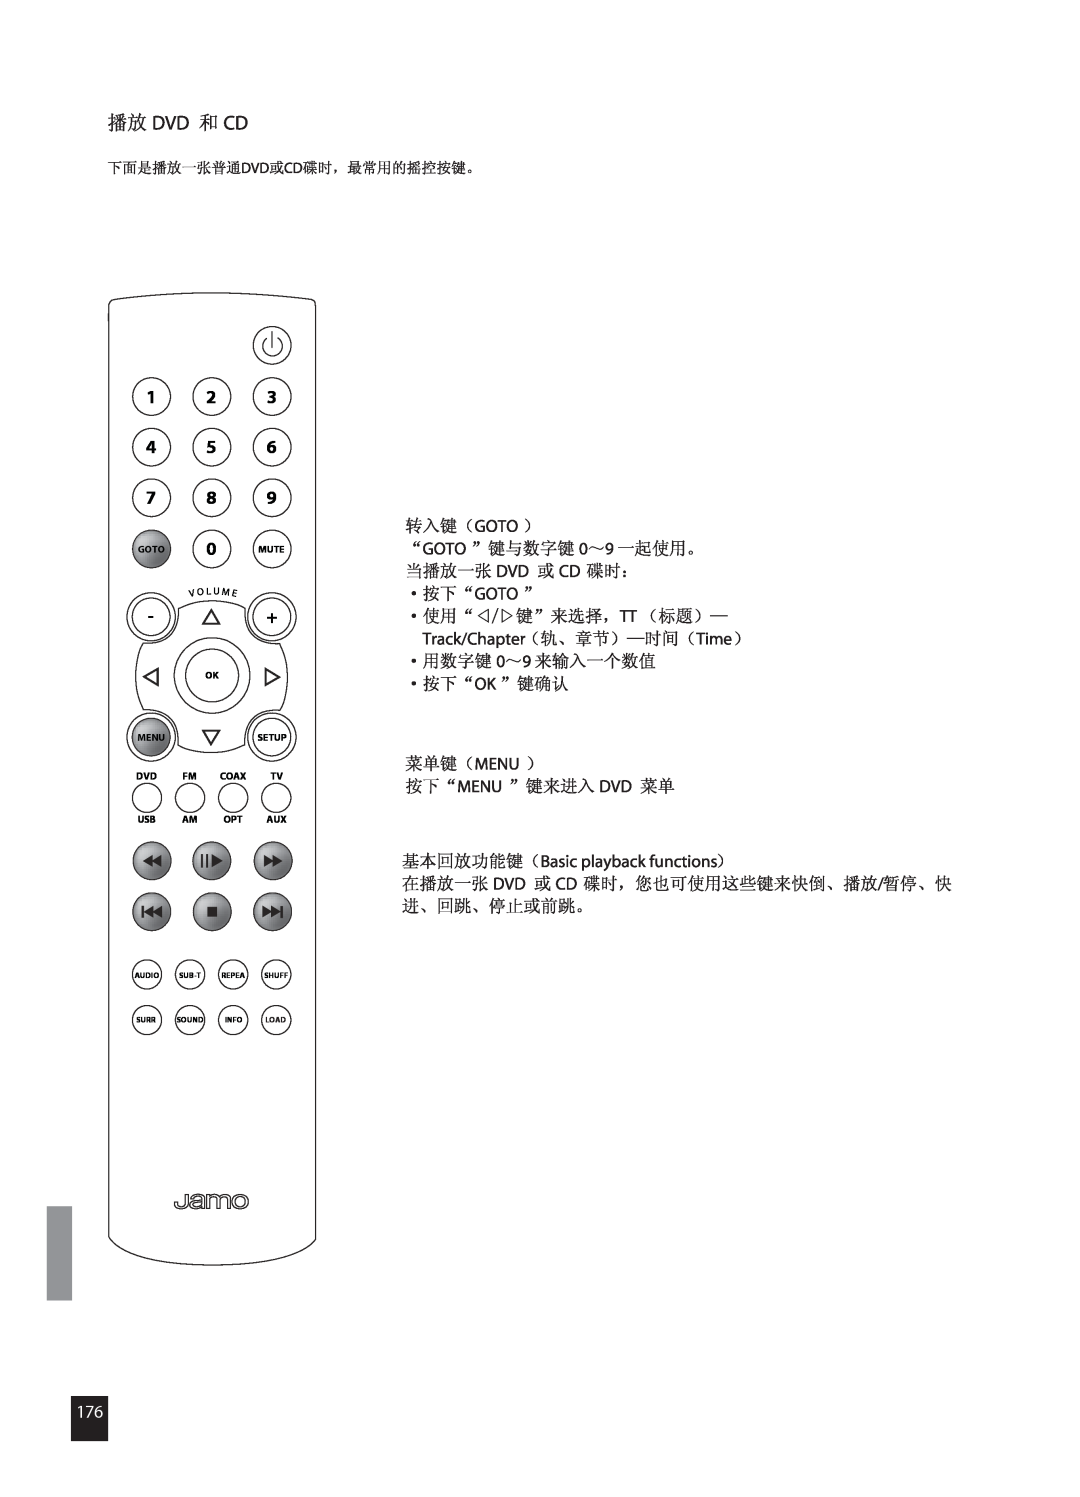 JAMO DMR 61 manual 1 2 4 5 7 8, GOTO 0 MUTE, Ok Menusetup Dvd Fm Coax Tv Usb Am Opt Aux, Audio Sub-T Repea Shuff 